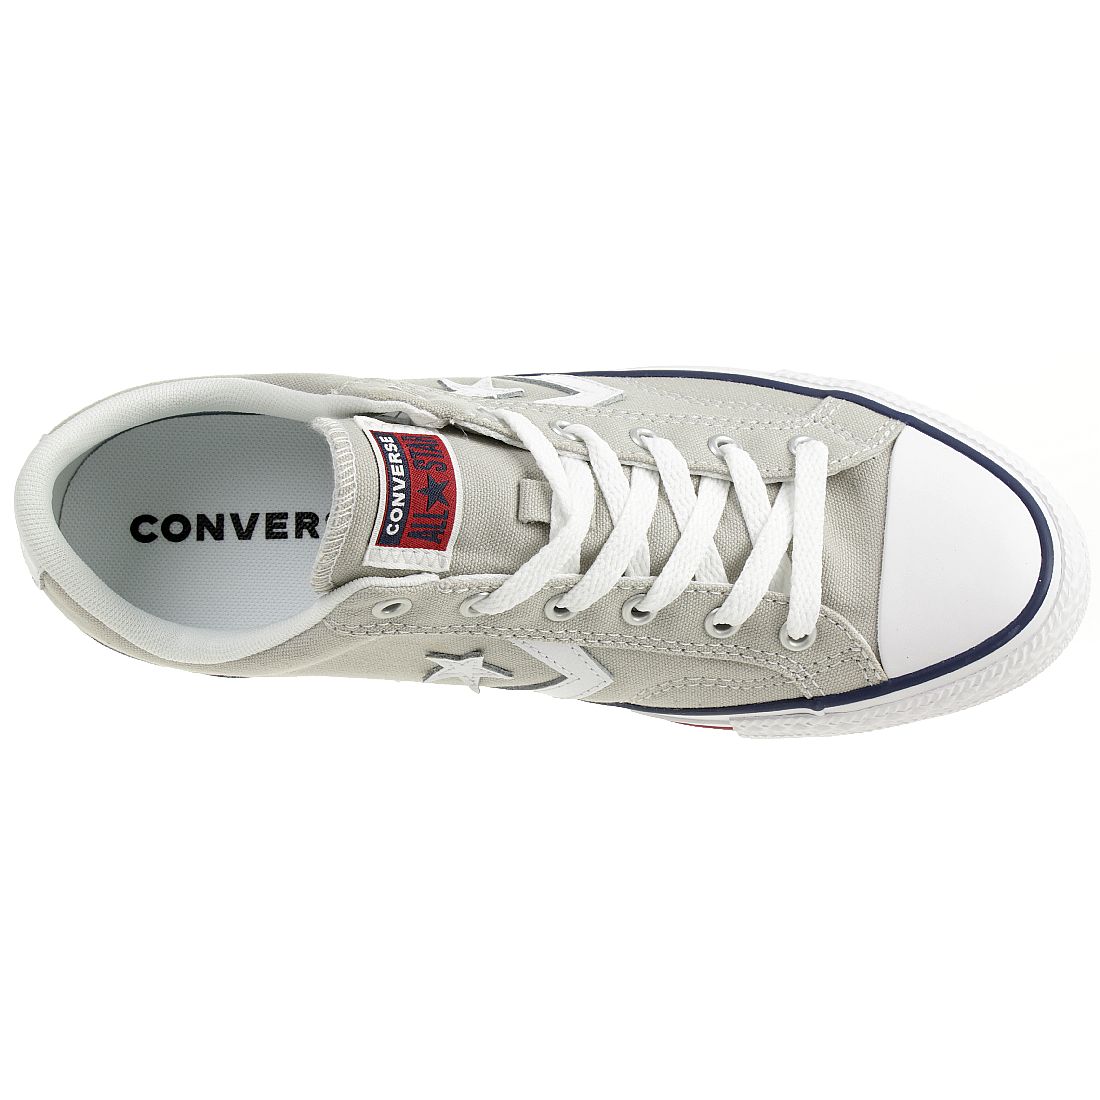 Converse STAR PLAYER OX Schuhe Sneaker Canvas Unisex Hellgrau 144148C